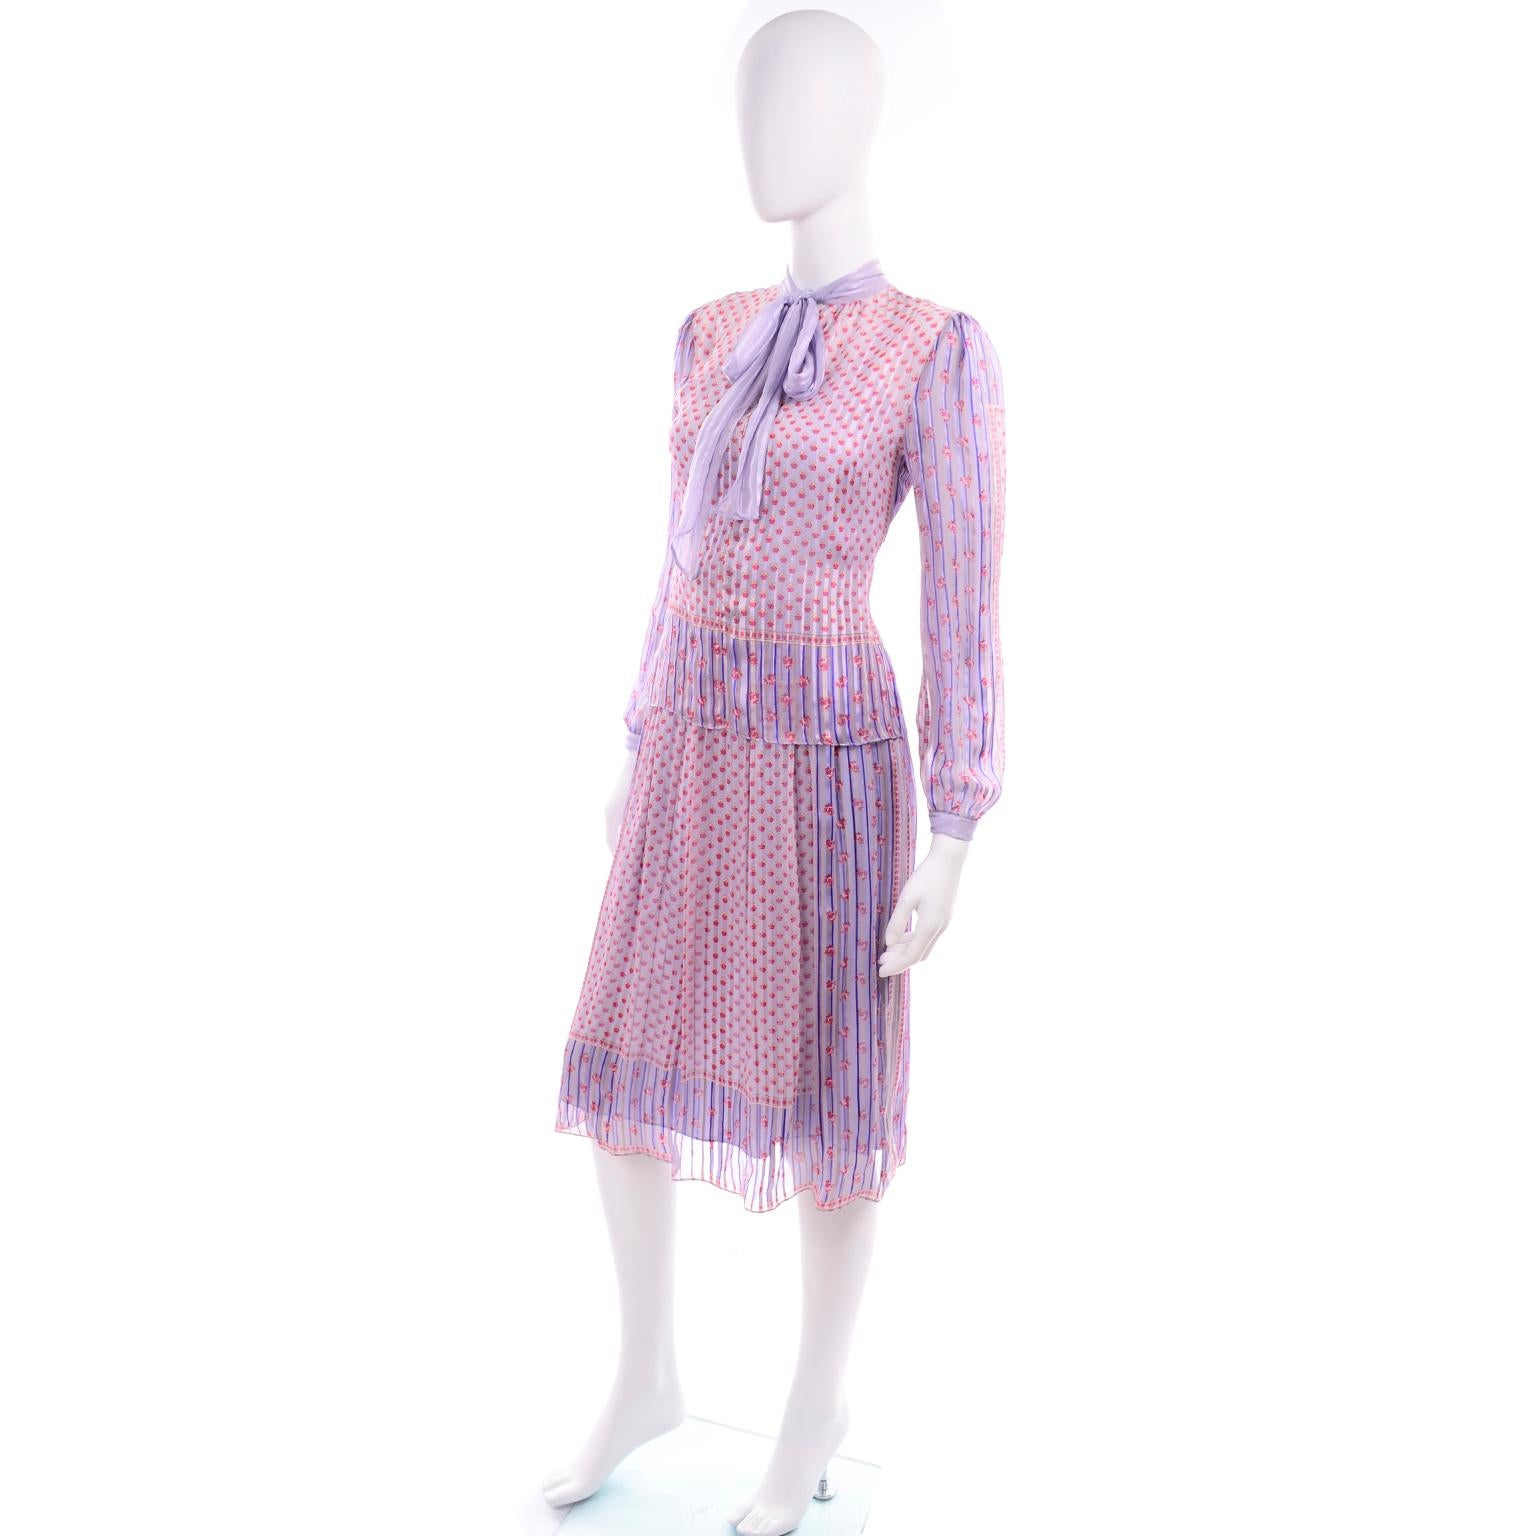 Women's or Men's Designer Silk Chiffon 2 Pc Dress in Purple Yellow Pink Floral Print Pattern Mix